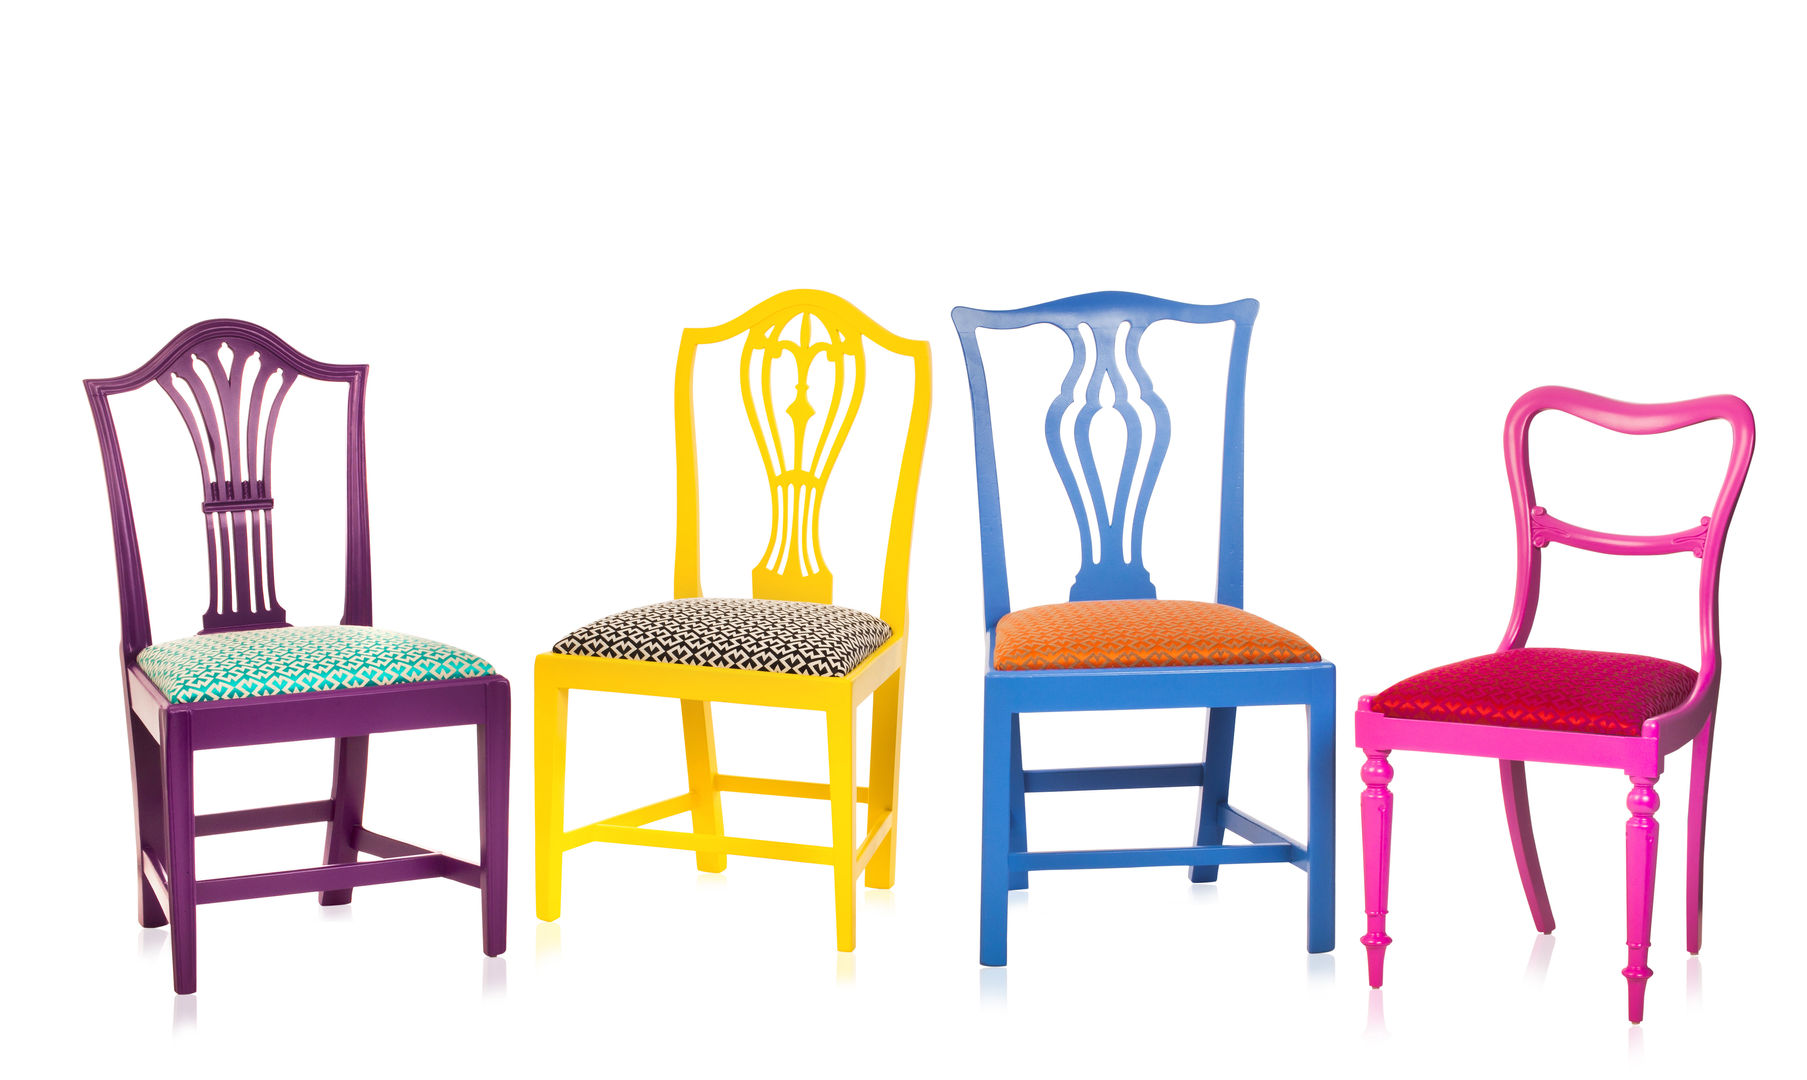 Klash Chairs Standrin غرفة السفرة خشب متين Multicolored dining chairs,dining chair,dining room chairs,dining room,Chairs & benches